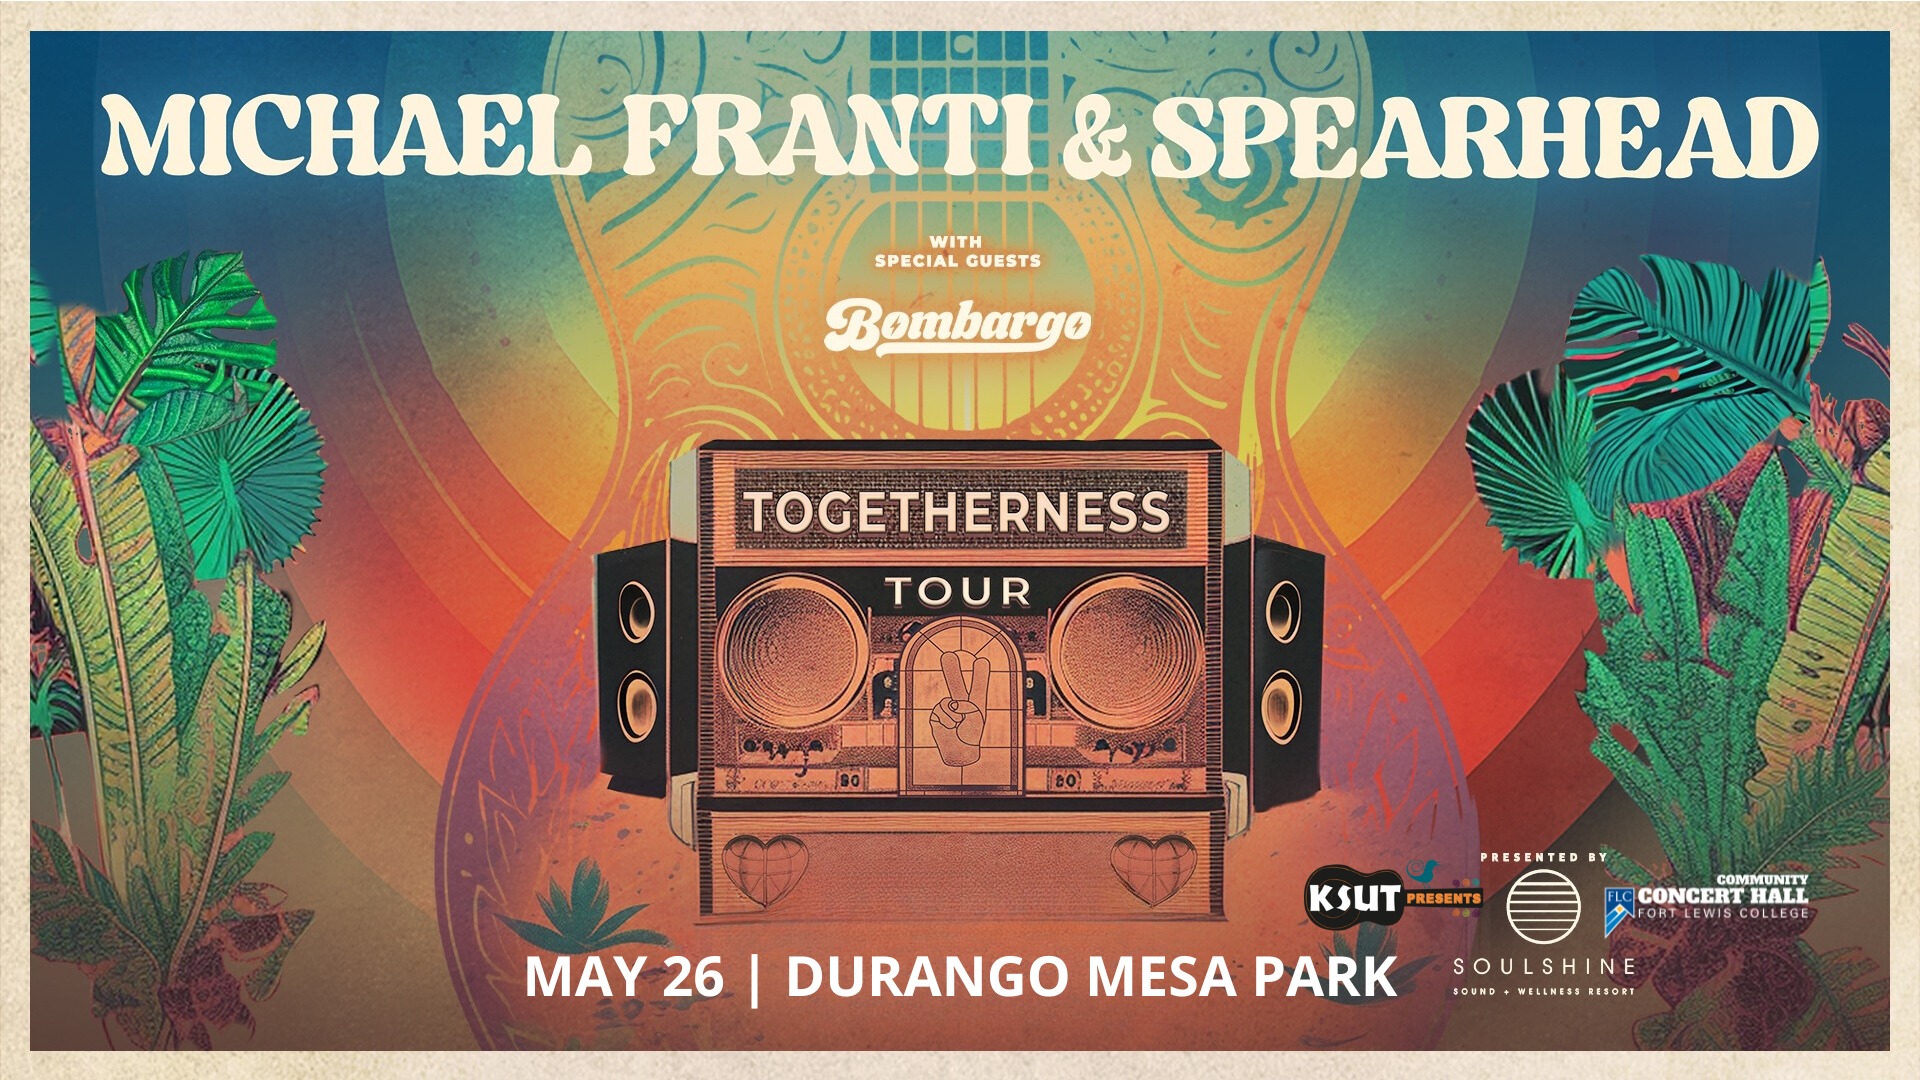 Michael Franti & Spearhead event poster